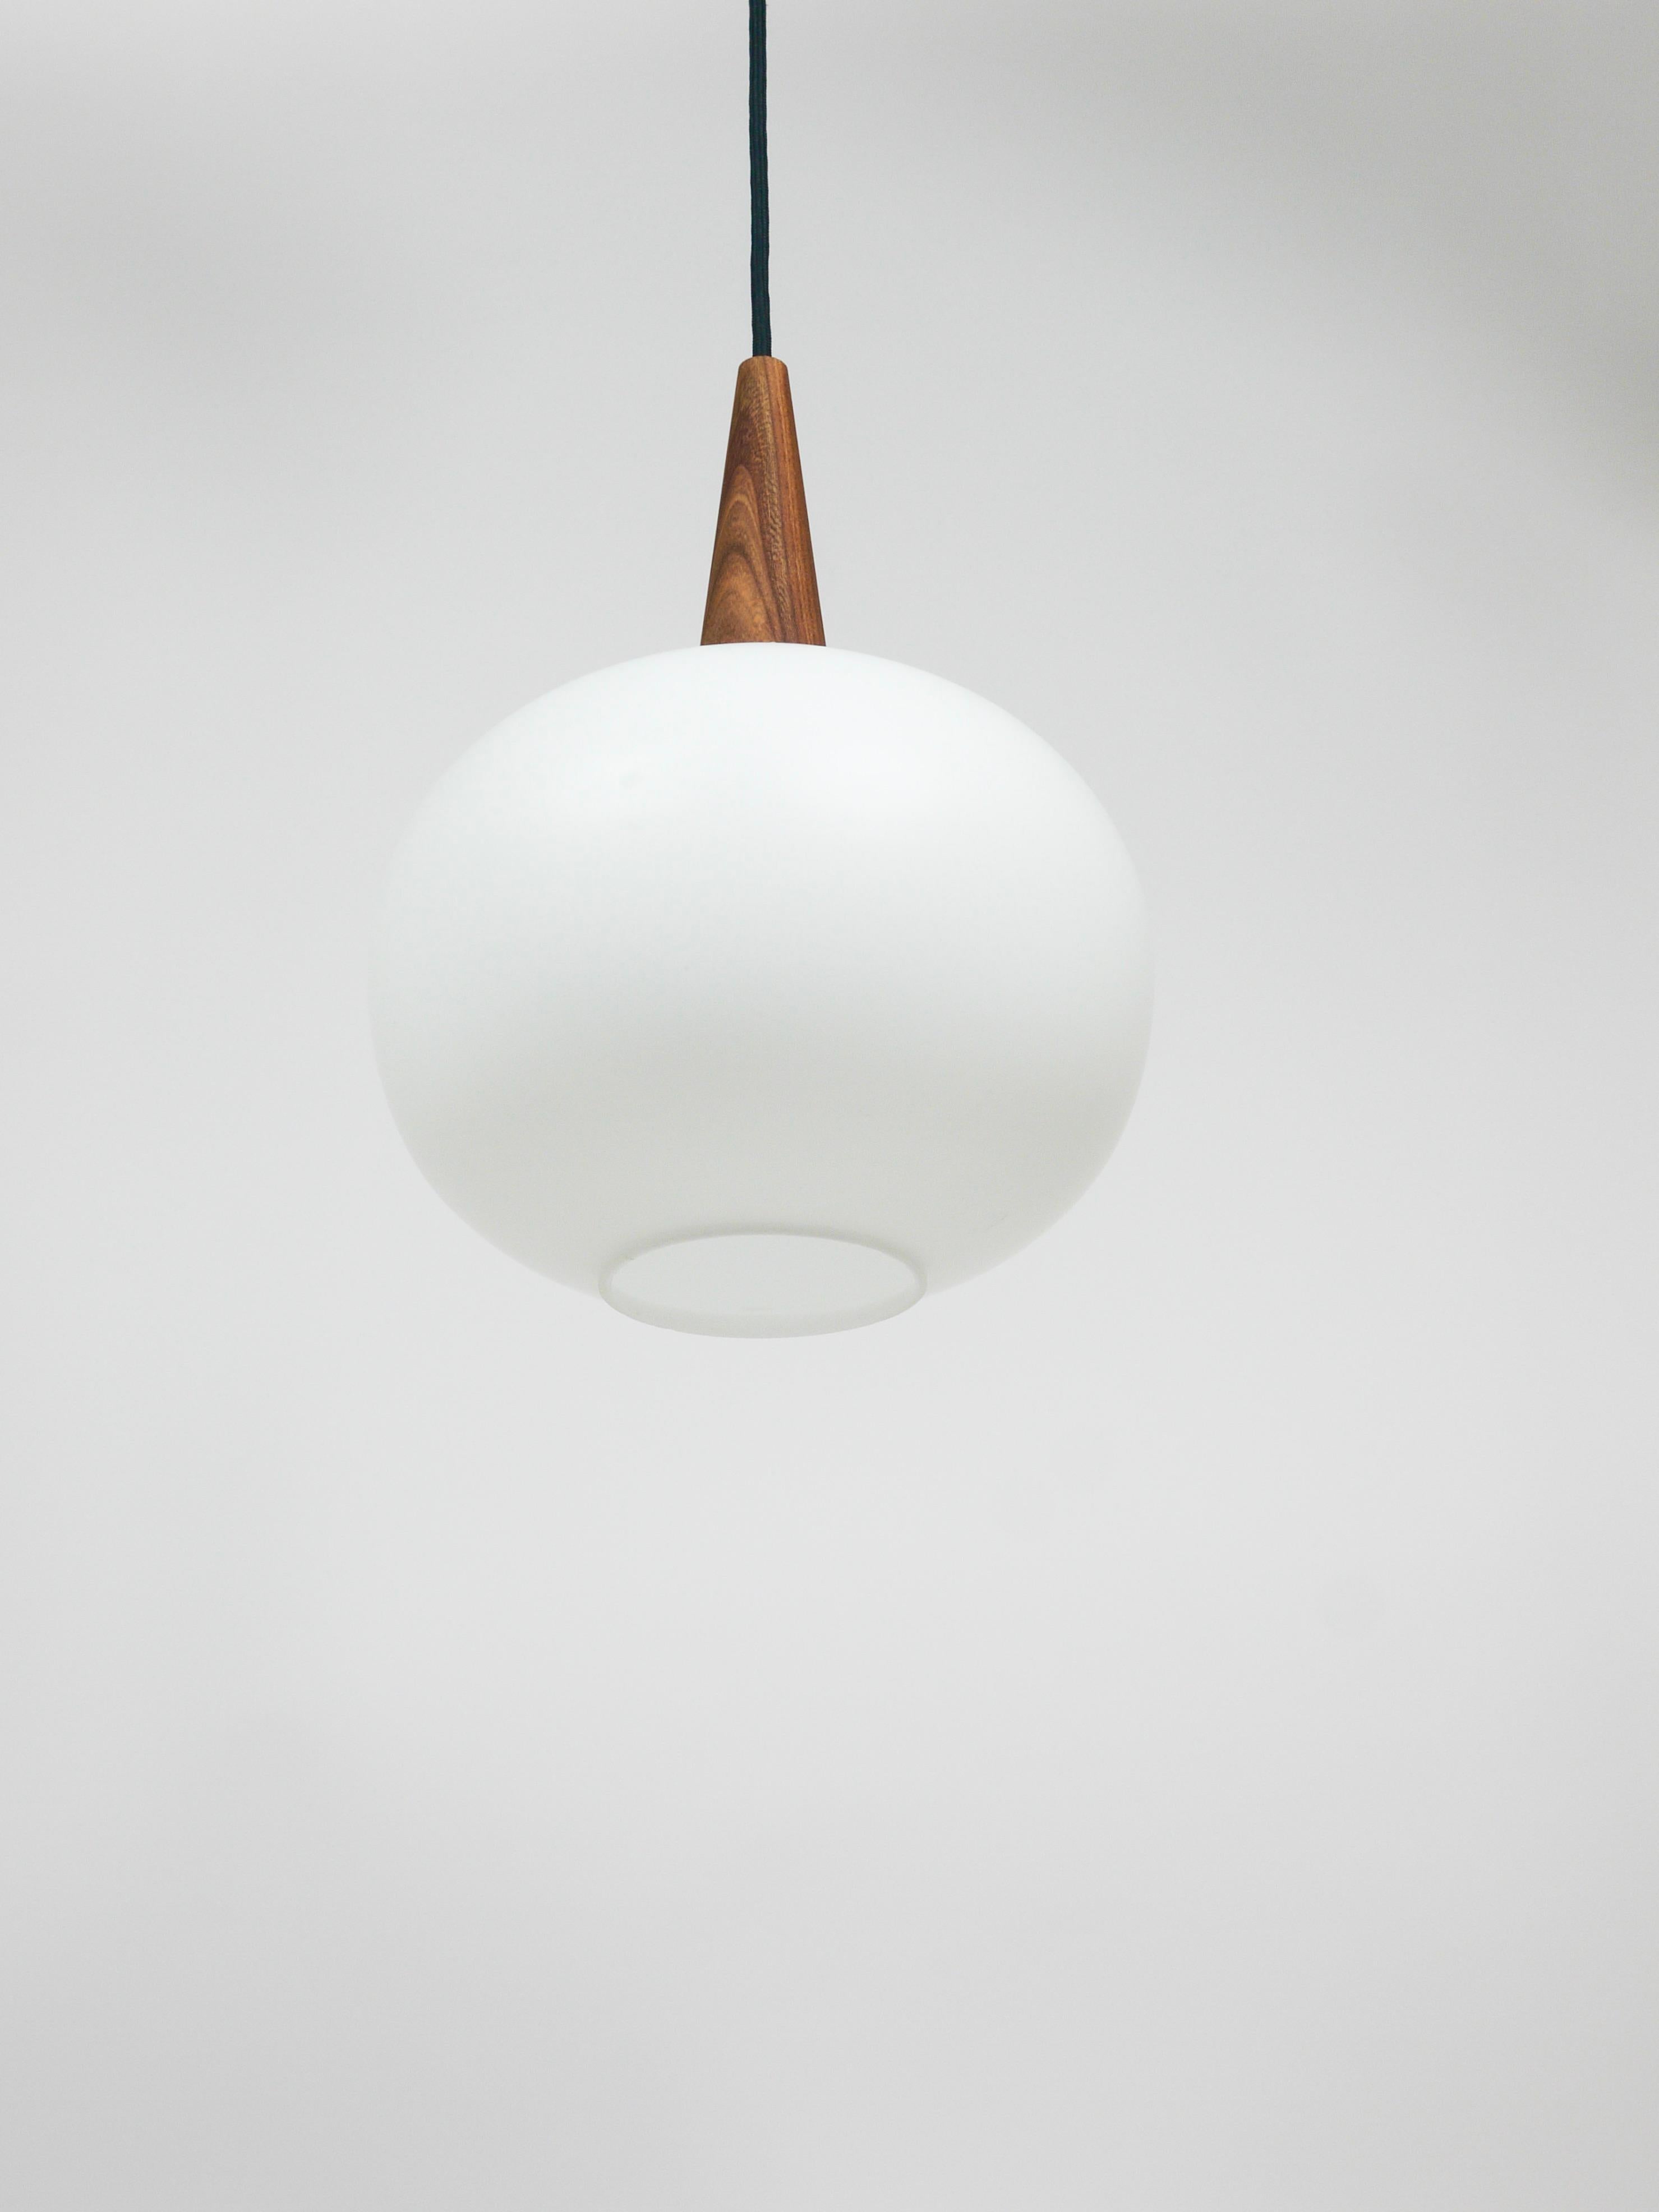 Louis Kalff Teak & Opaline Pendant Suspension Lamp, Philips, Netherlands For Sale 7